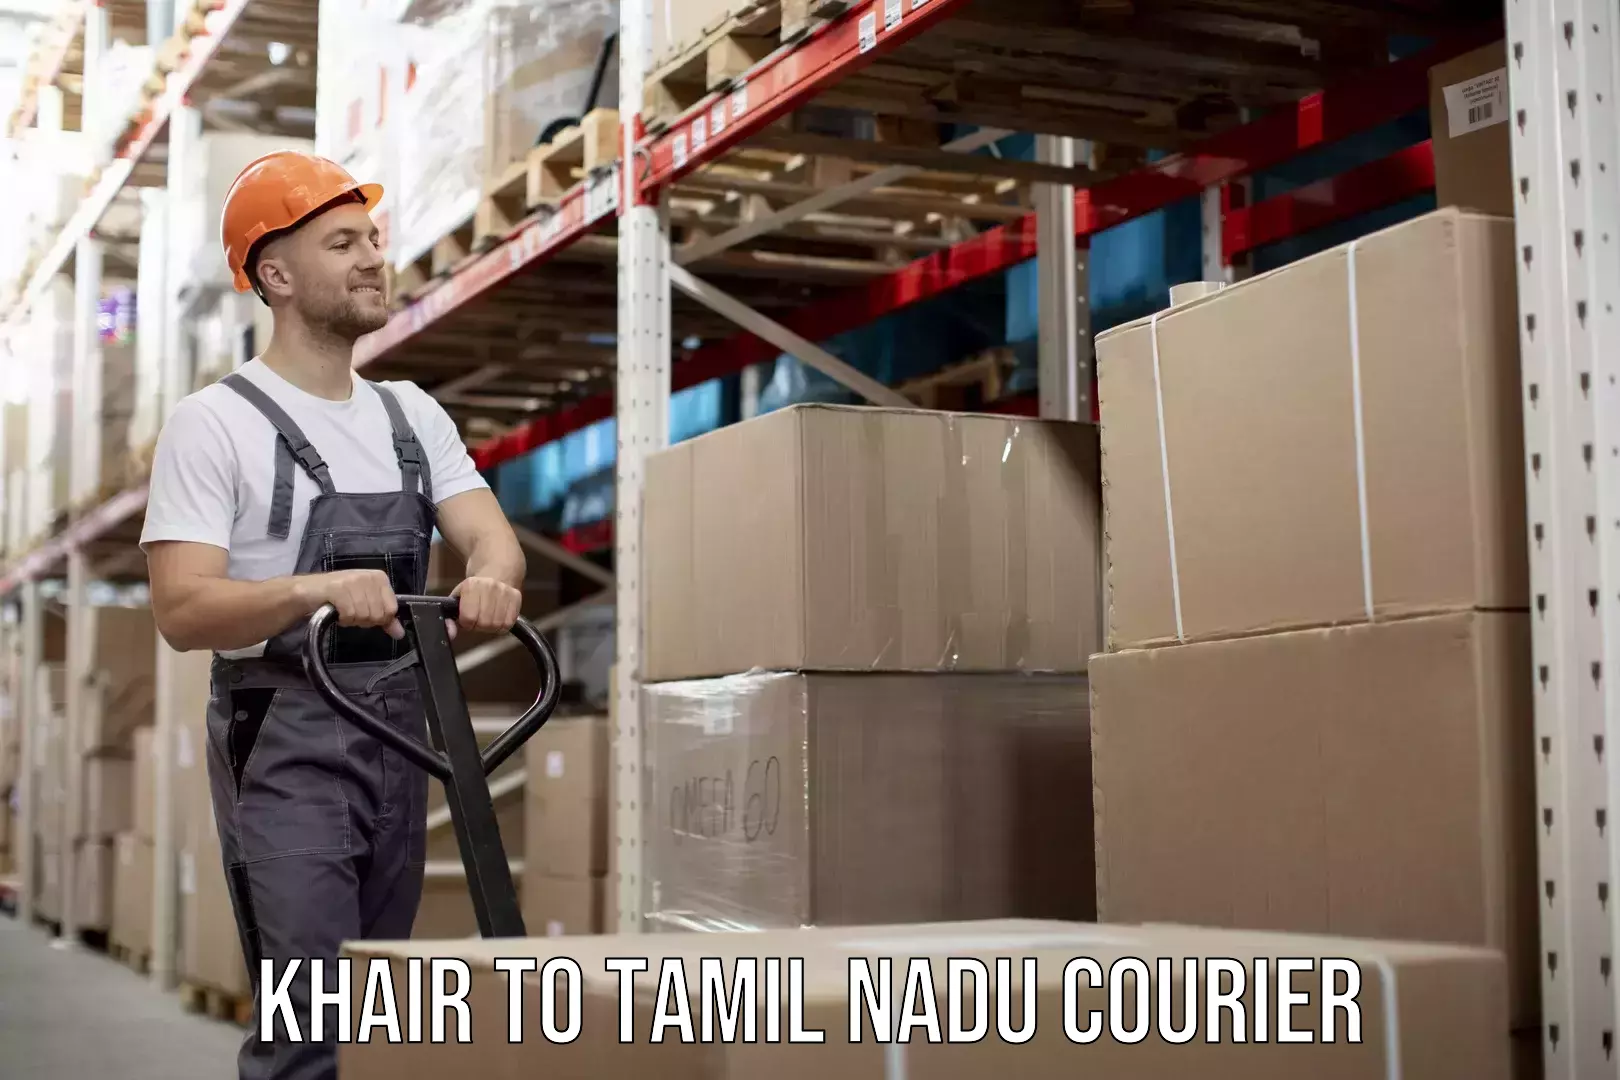 Professional moving company Khair to Tamil Nadu